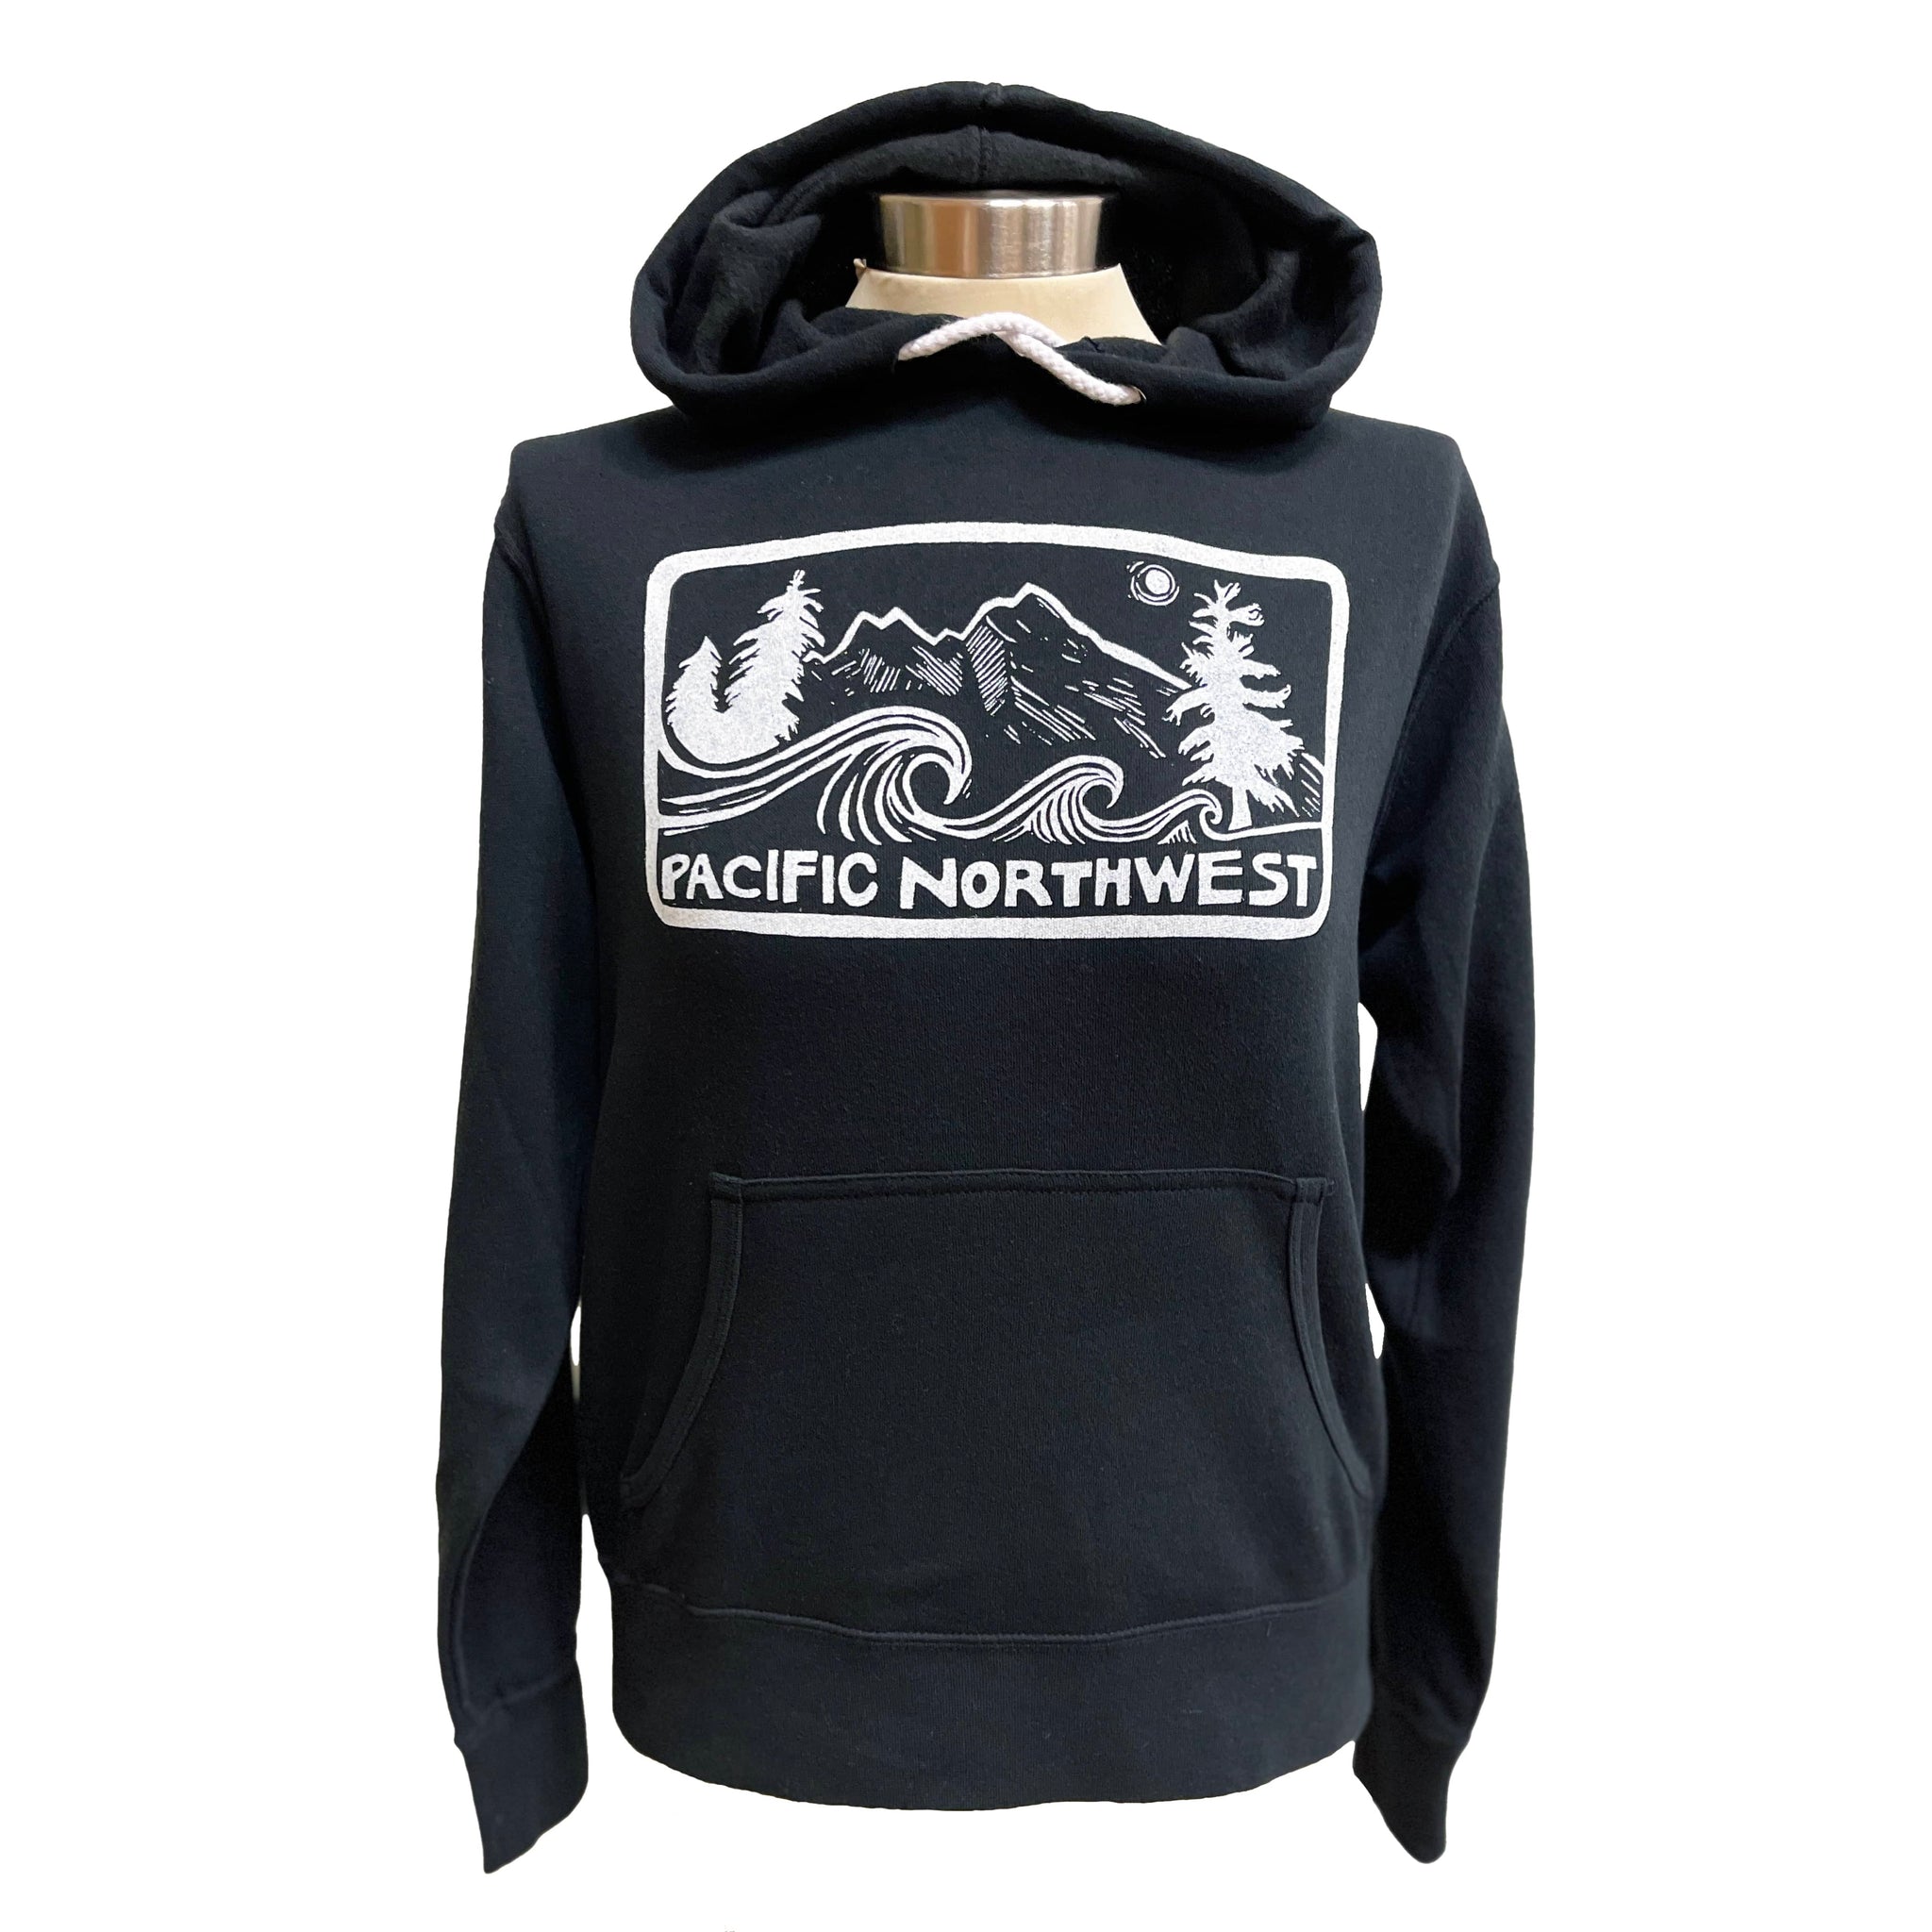 Pacific Northwest Vol. 2 Unisex Pullover Hoodie in Black